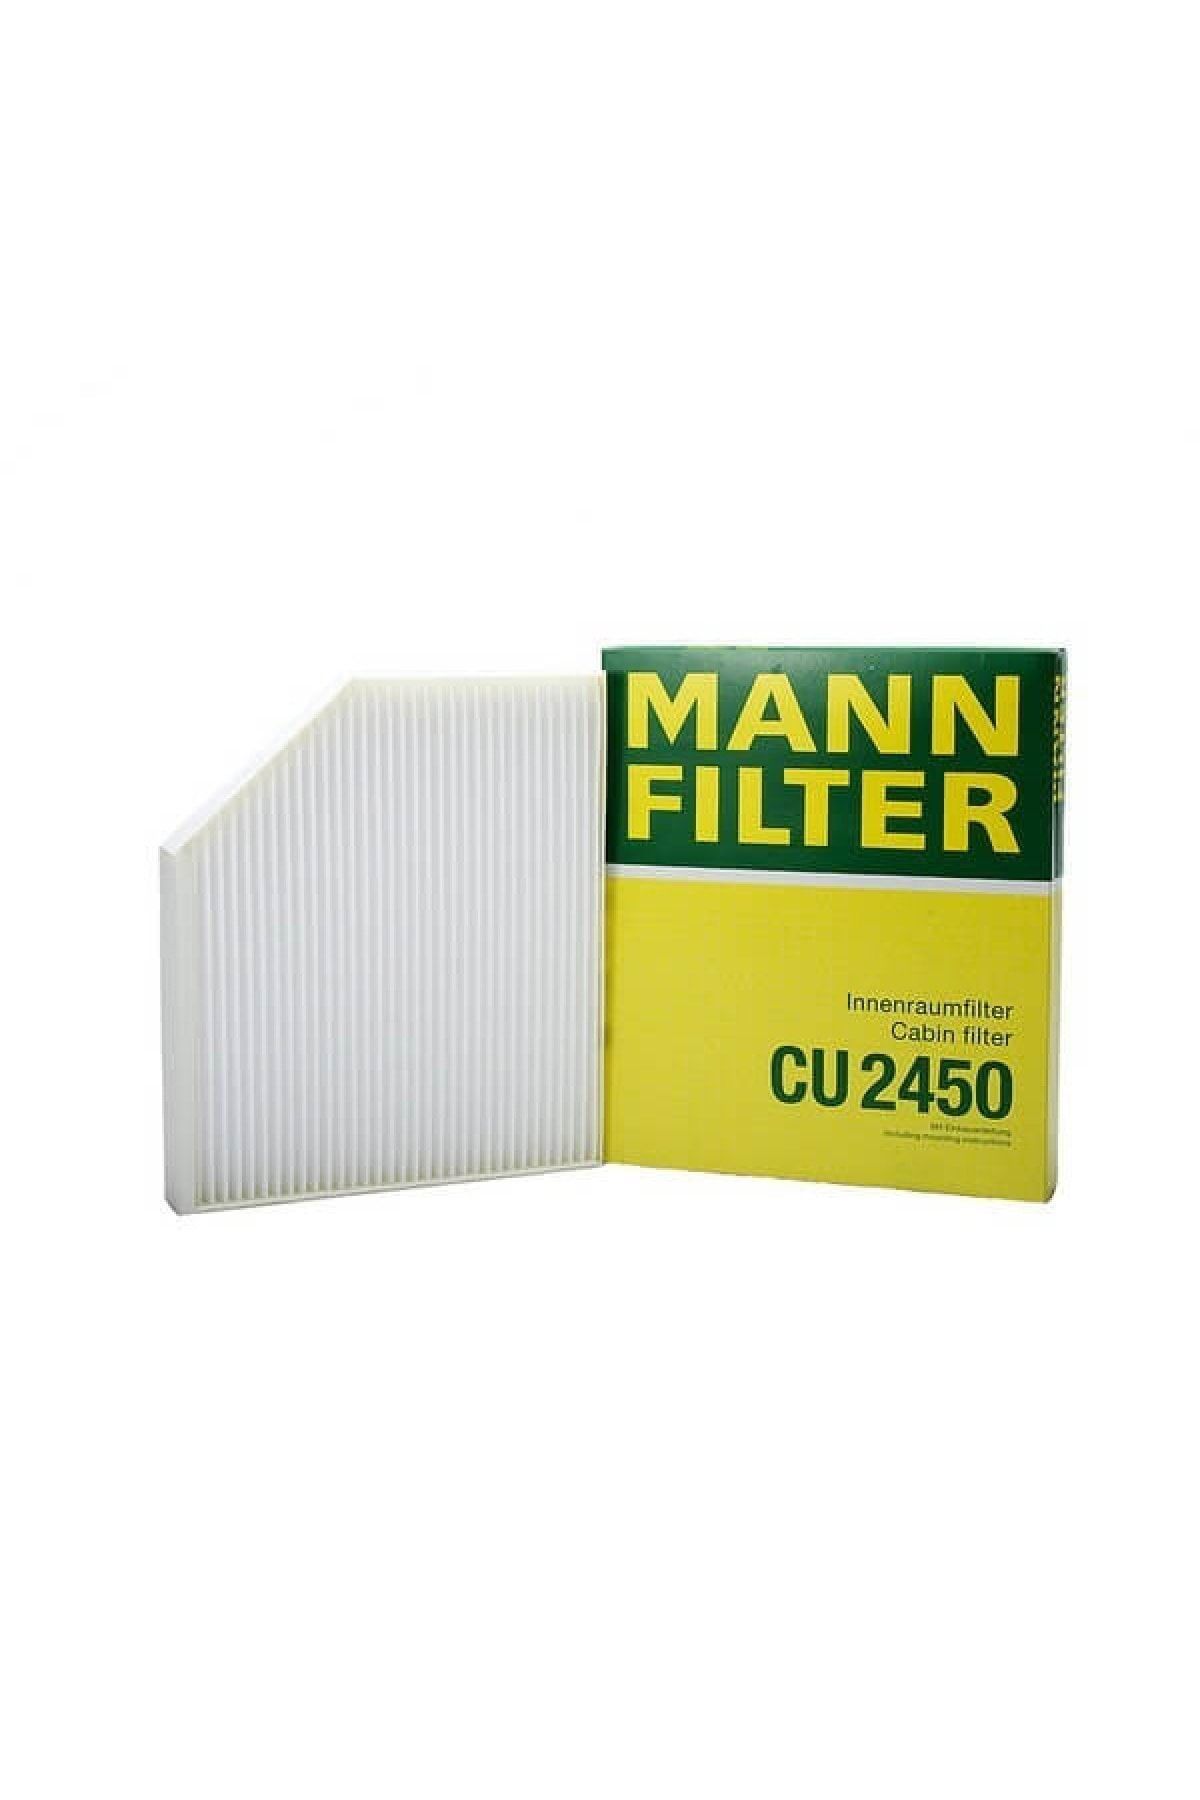 Mann Filter Uzmanparça Audi A4 Polen Filtresi Mann Filter 2008-2015 B8